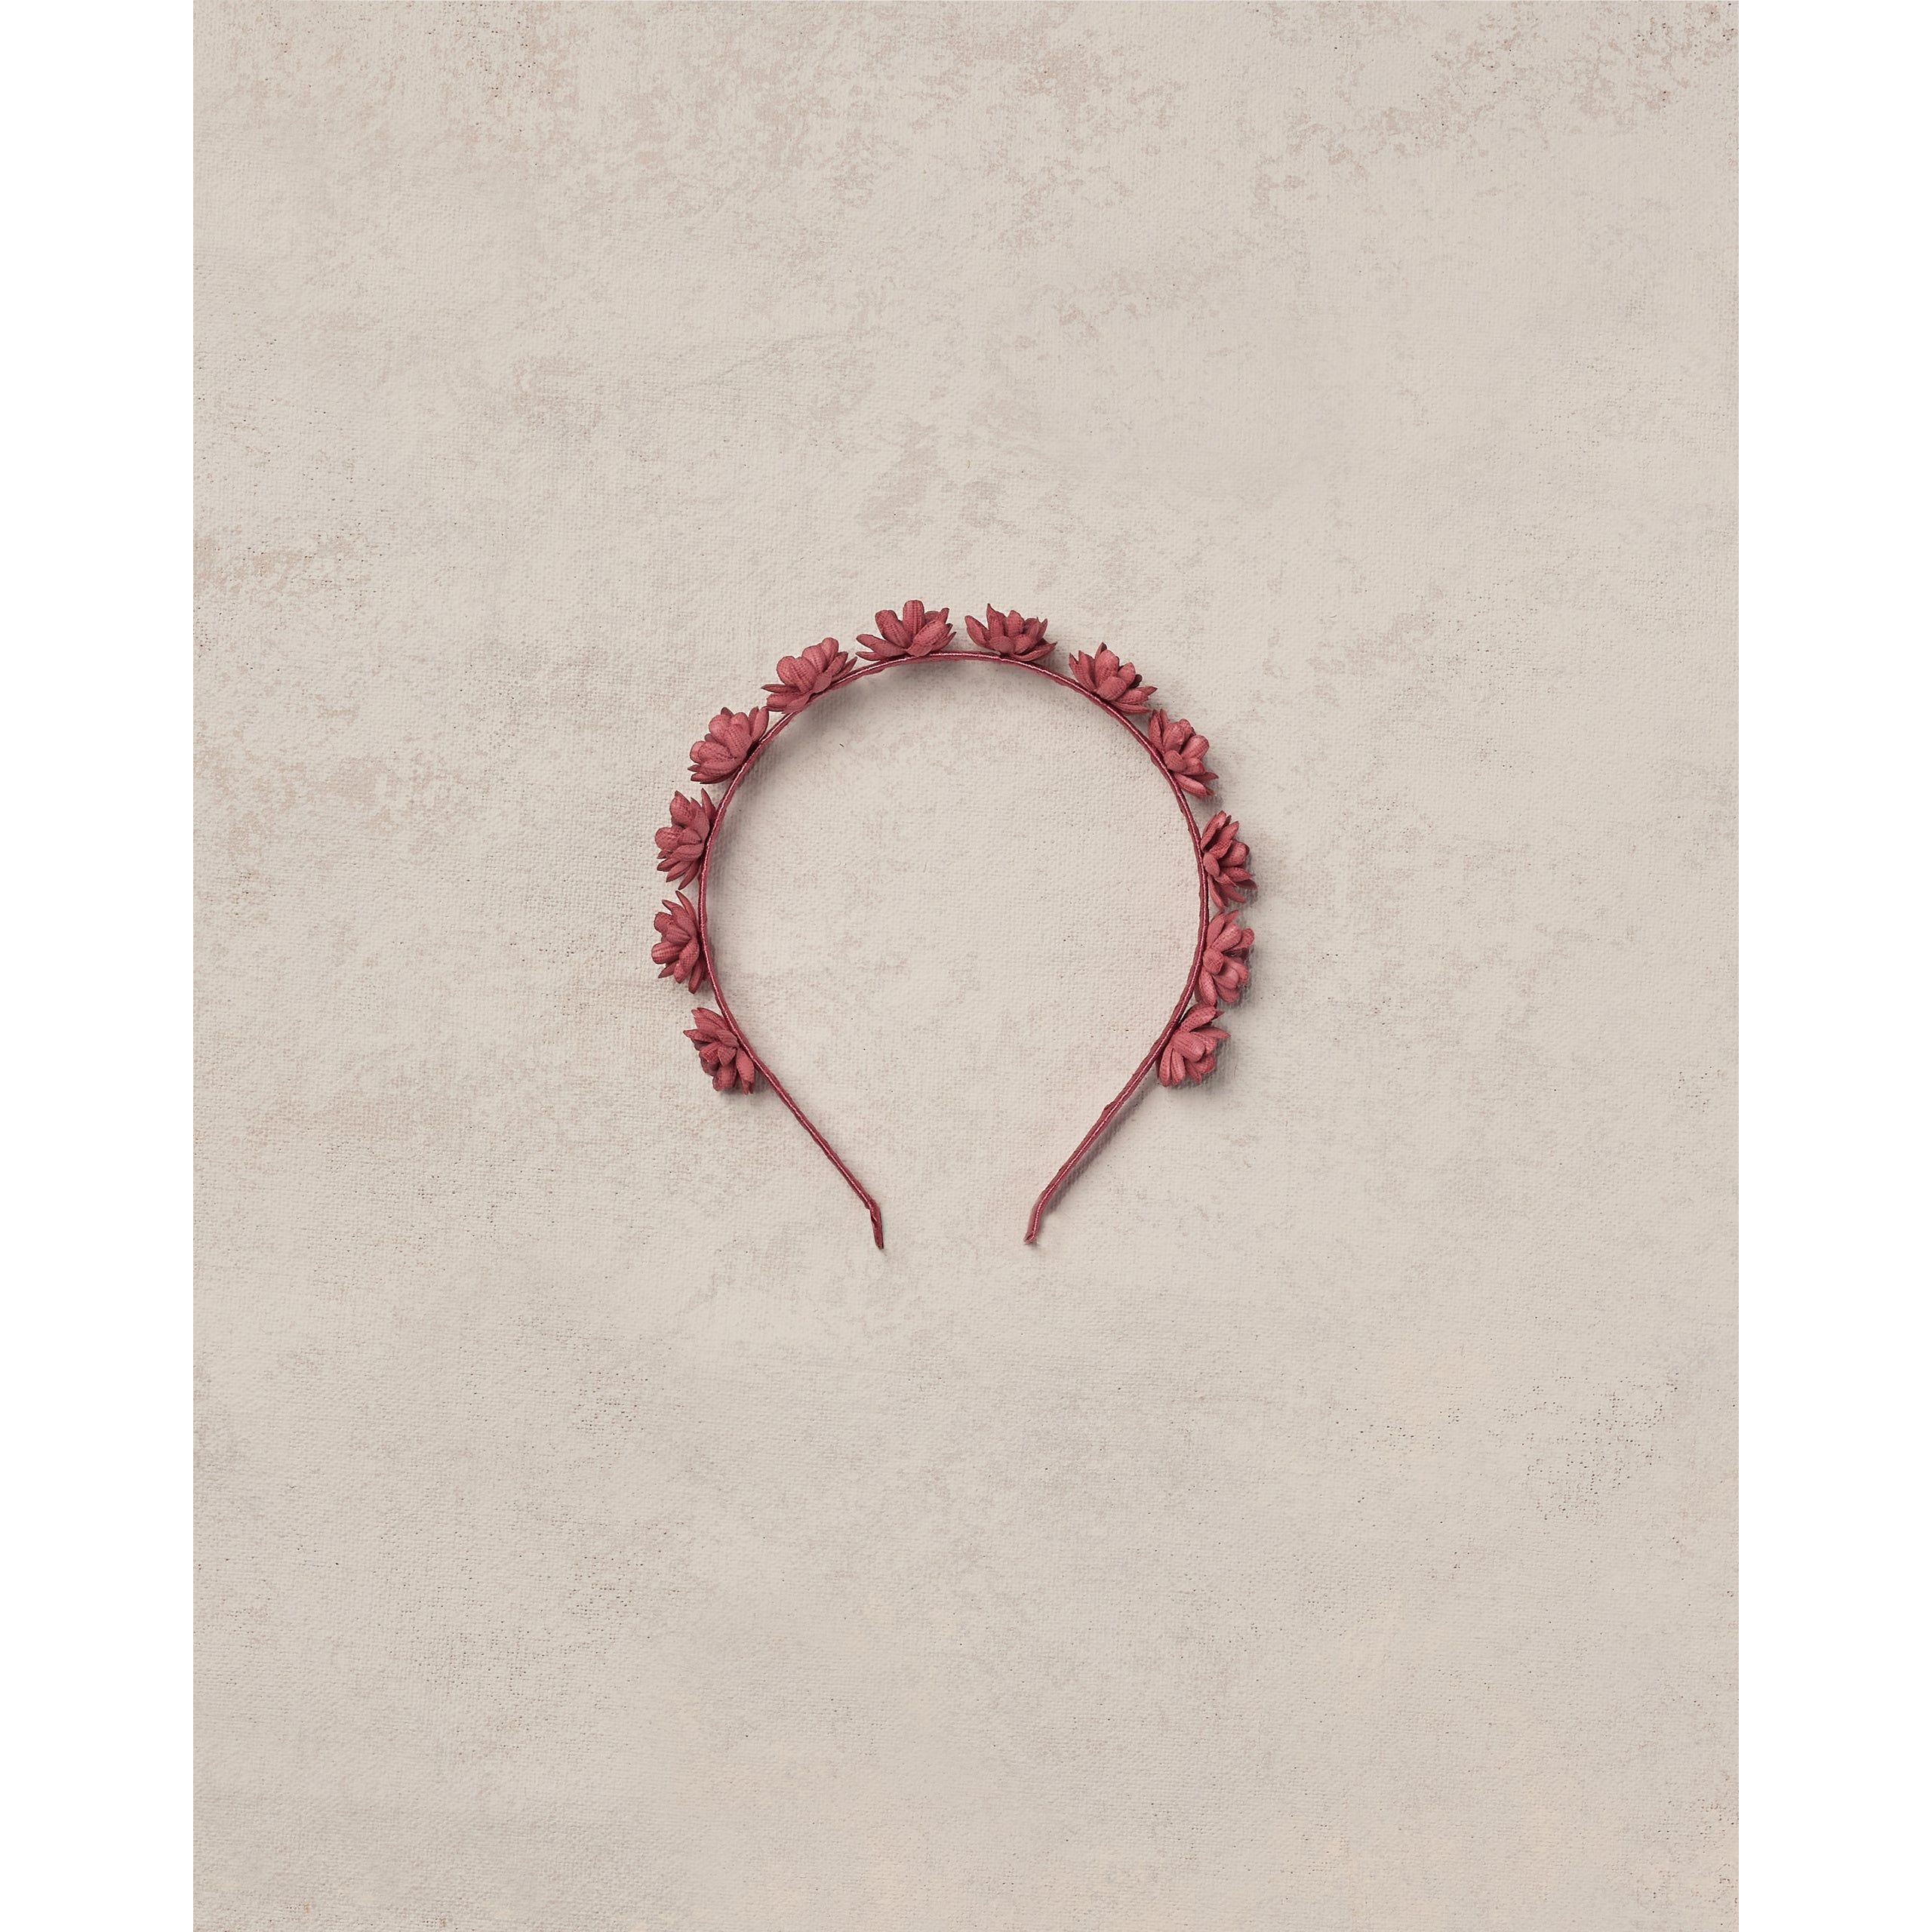 Floral Headband - Berry